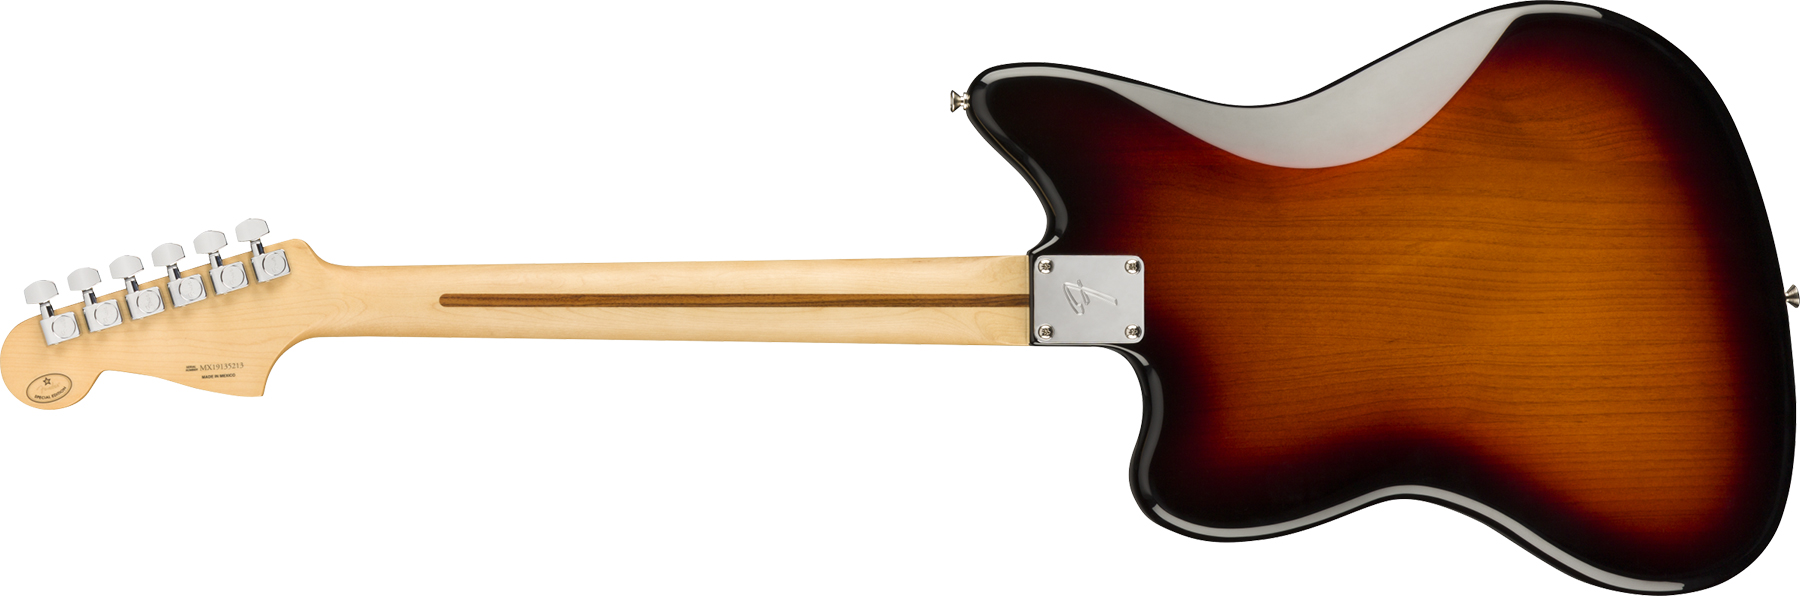 Fender Jazzmaster Player Ltd 2s Trem Pf - 3-color Sunburst - Retro-rock elektrische gitaar - Variation 1